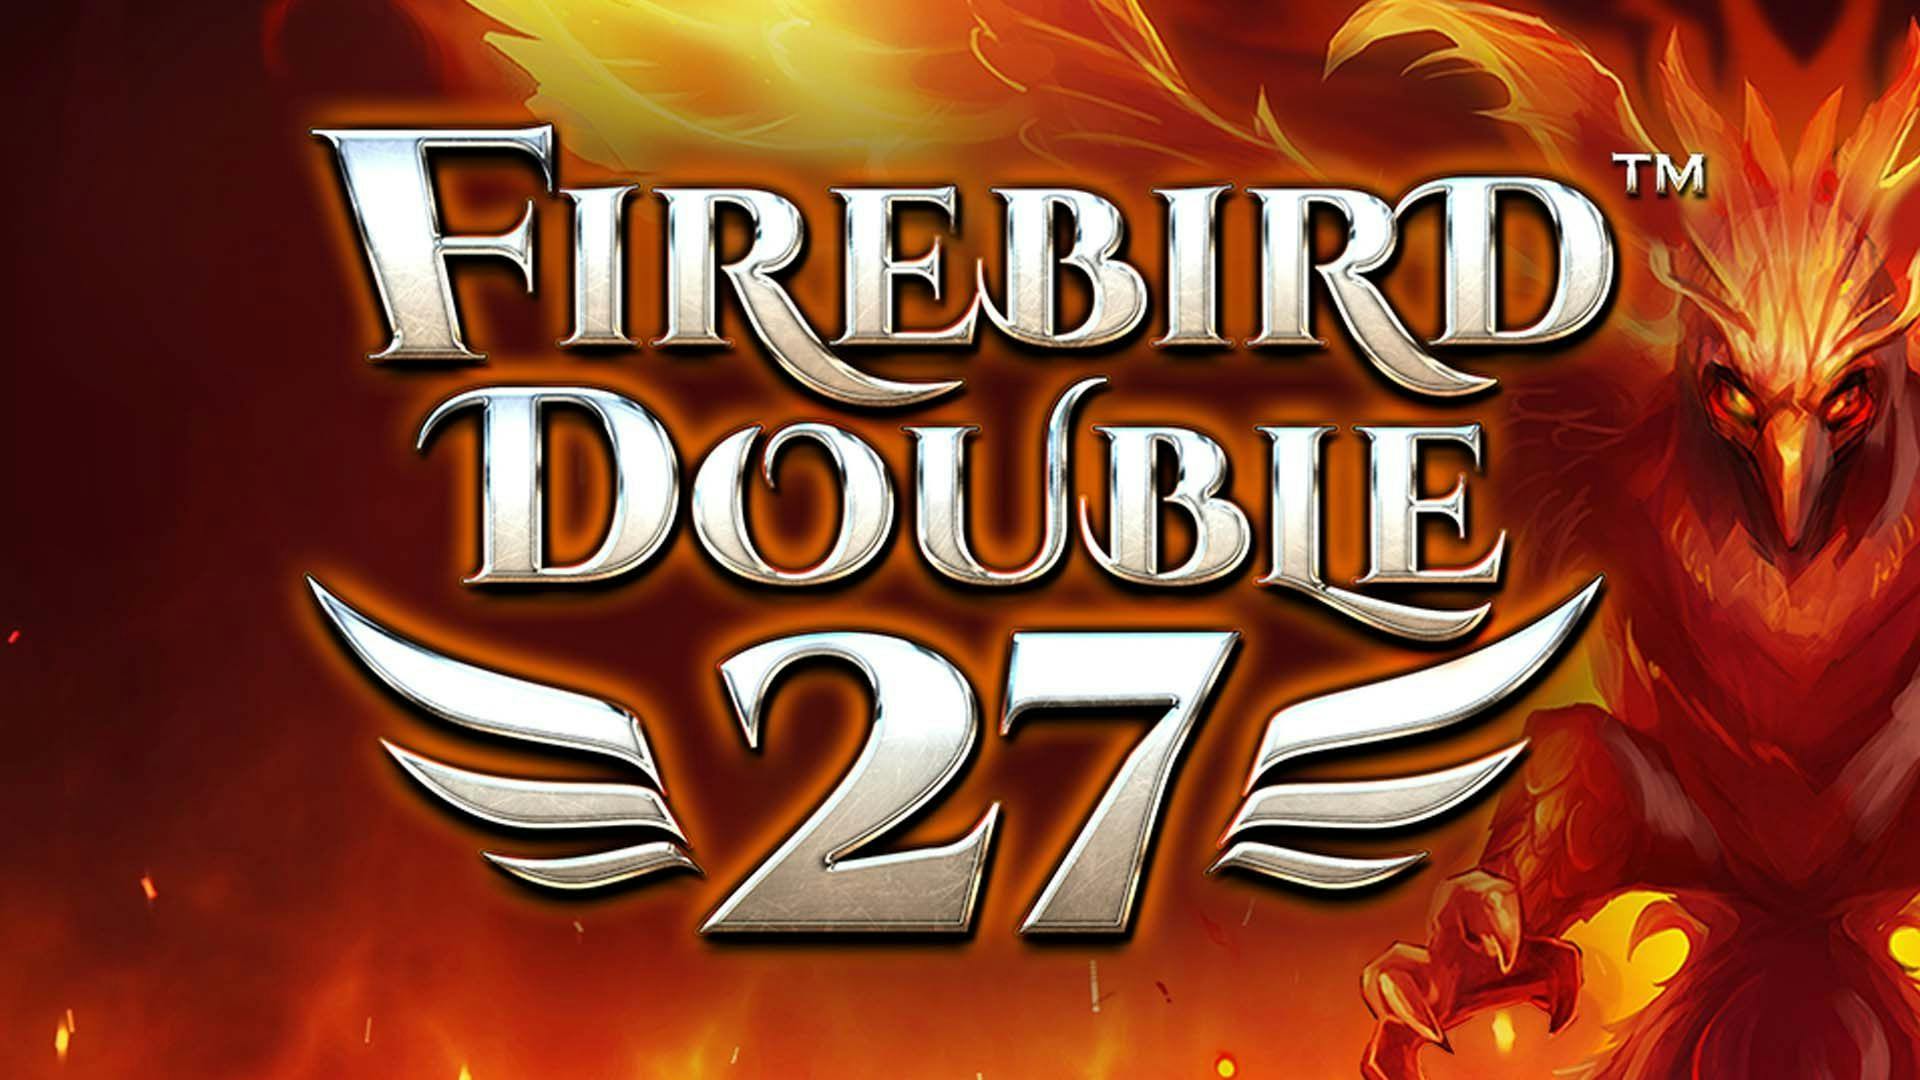 Firebird Double 27 Slot Machine Online Free Game Play